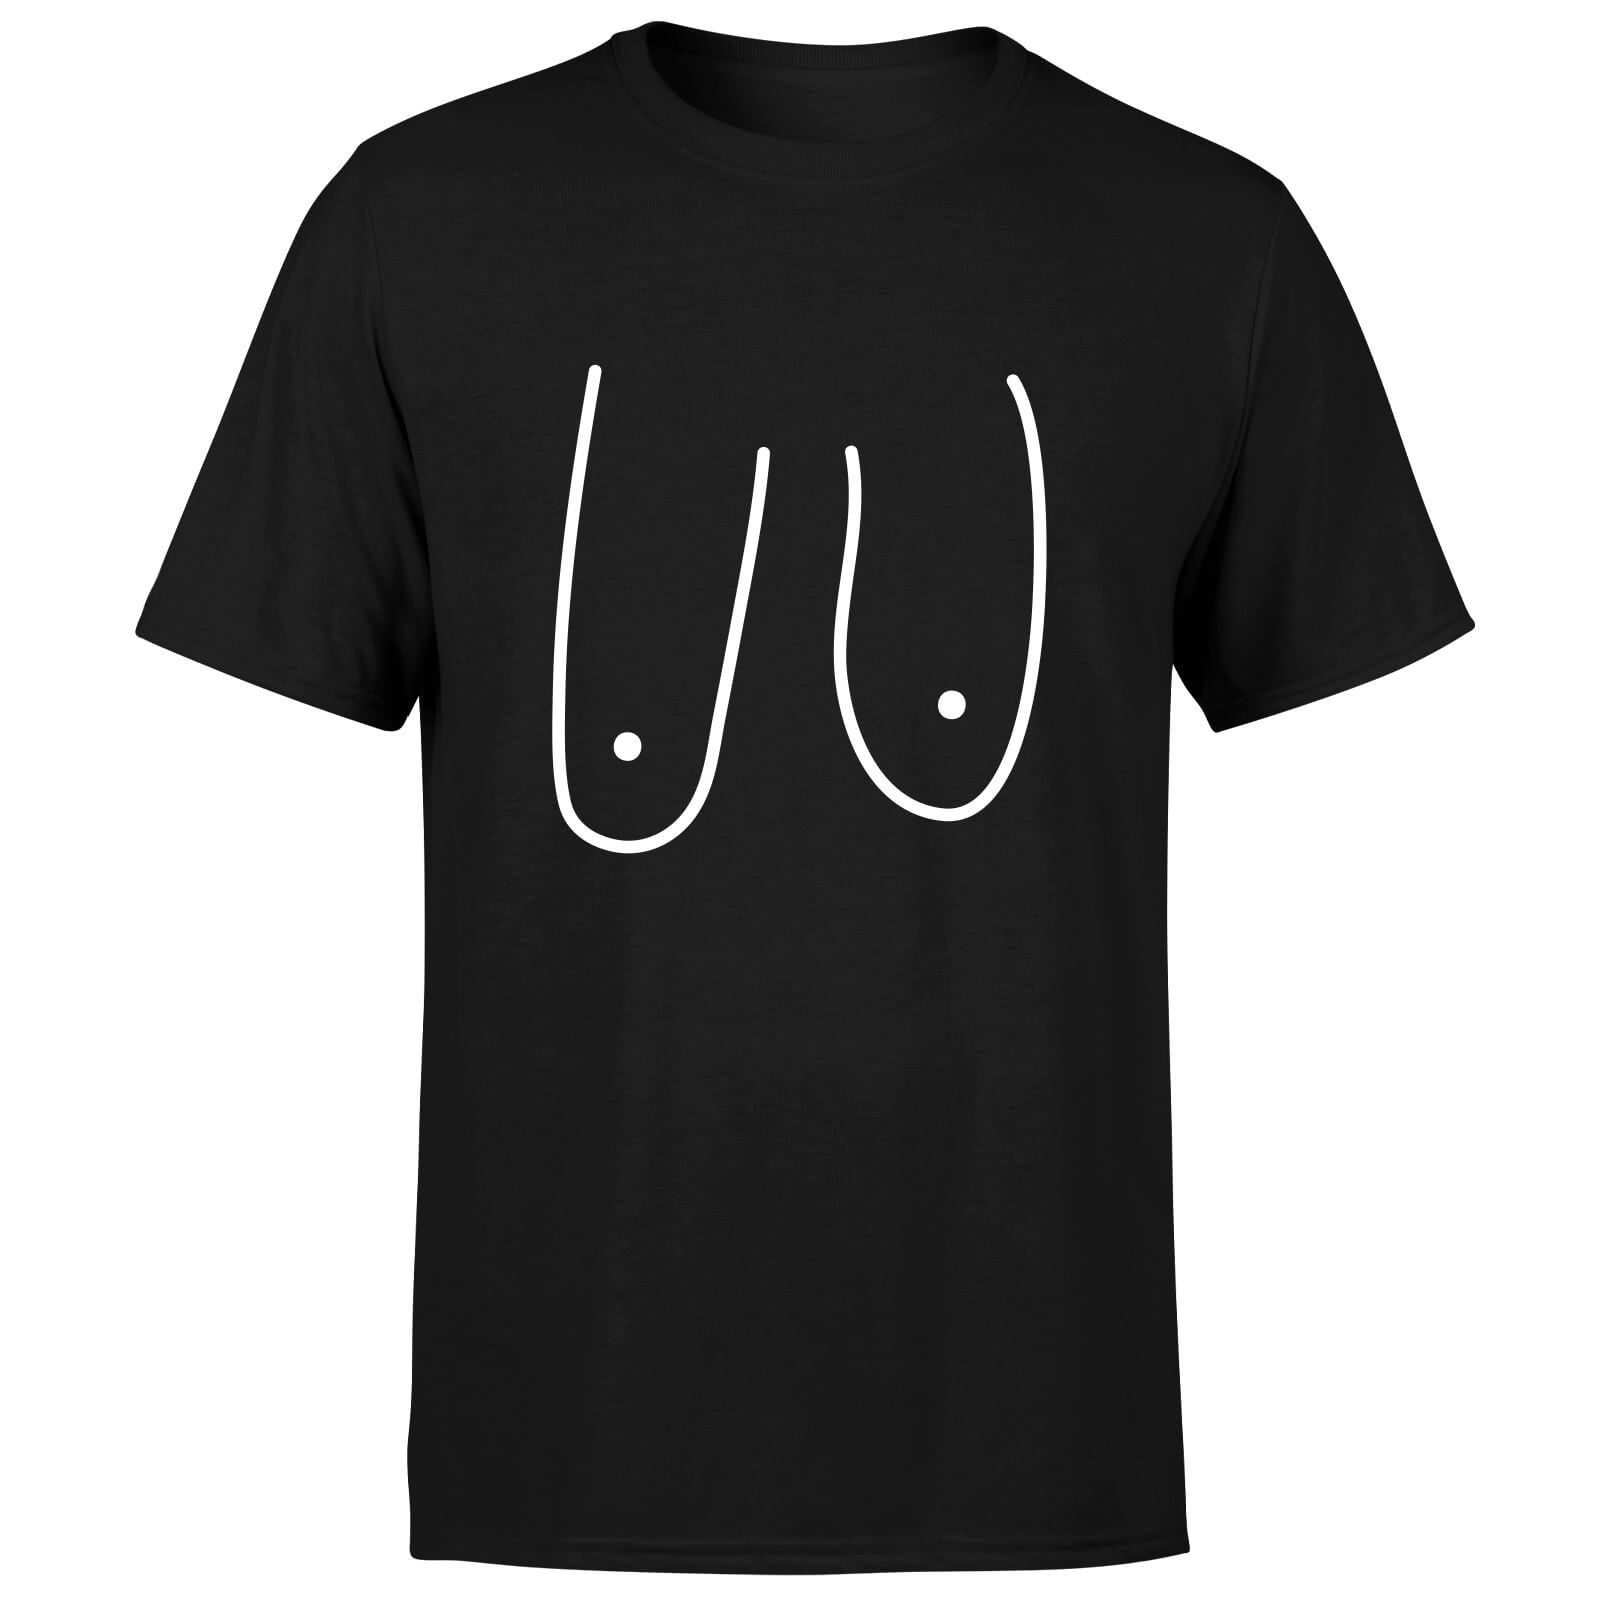 Droopy Norks Men's T-Shirt - Black - XS - Black